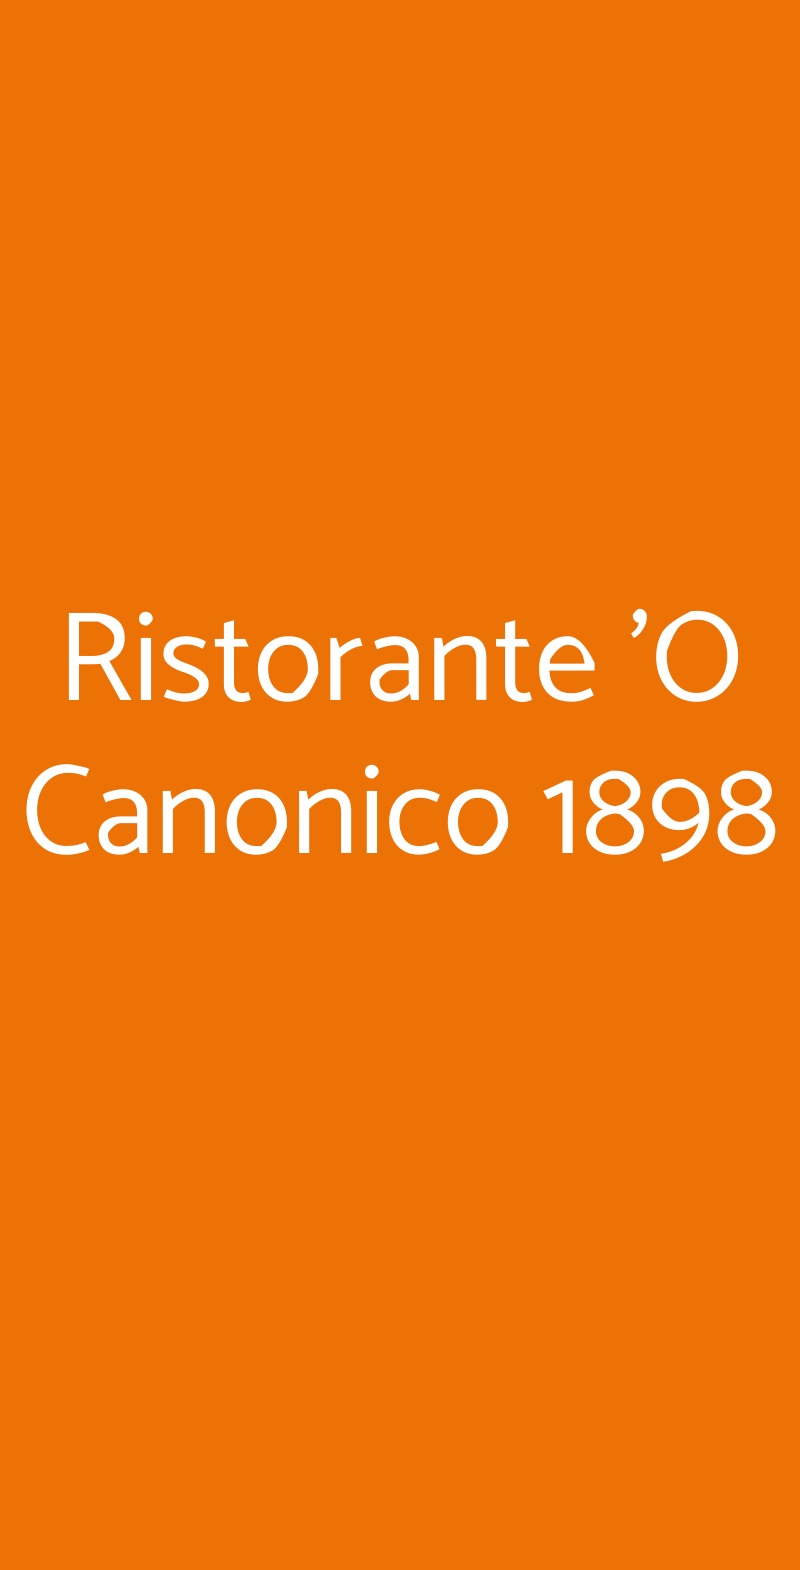 Ristorante 'O Canonico 1898 Sorrento menù 1 pagina